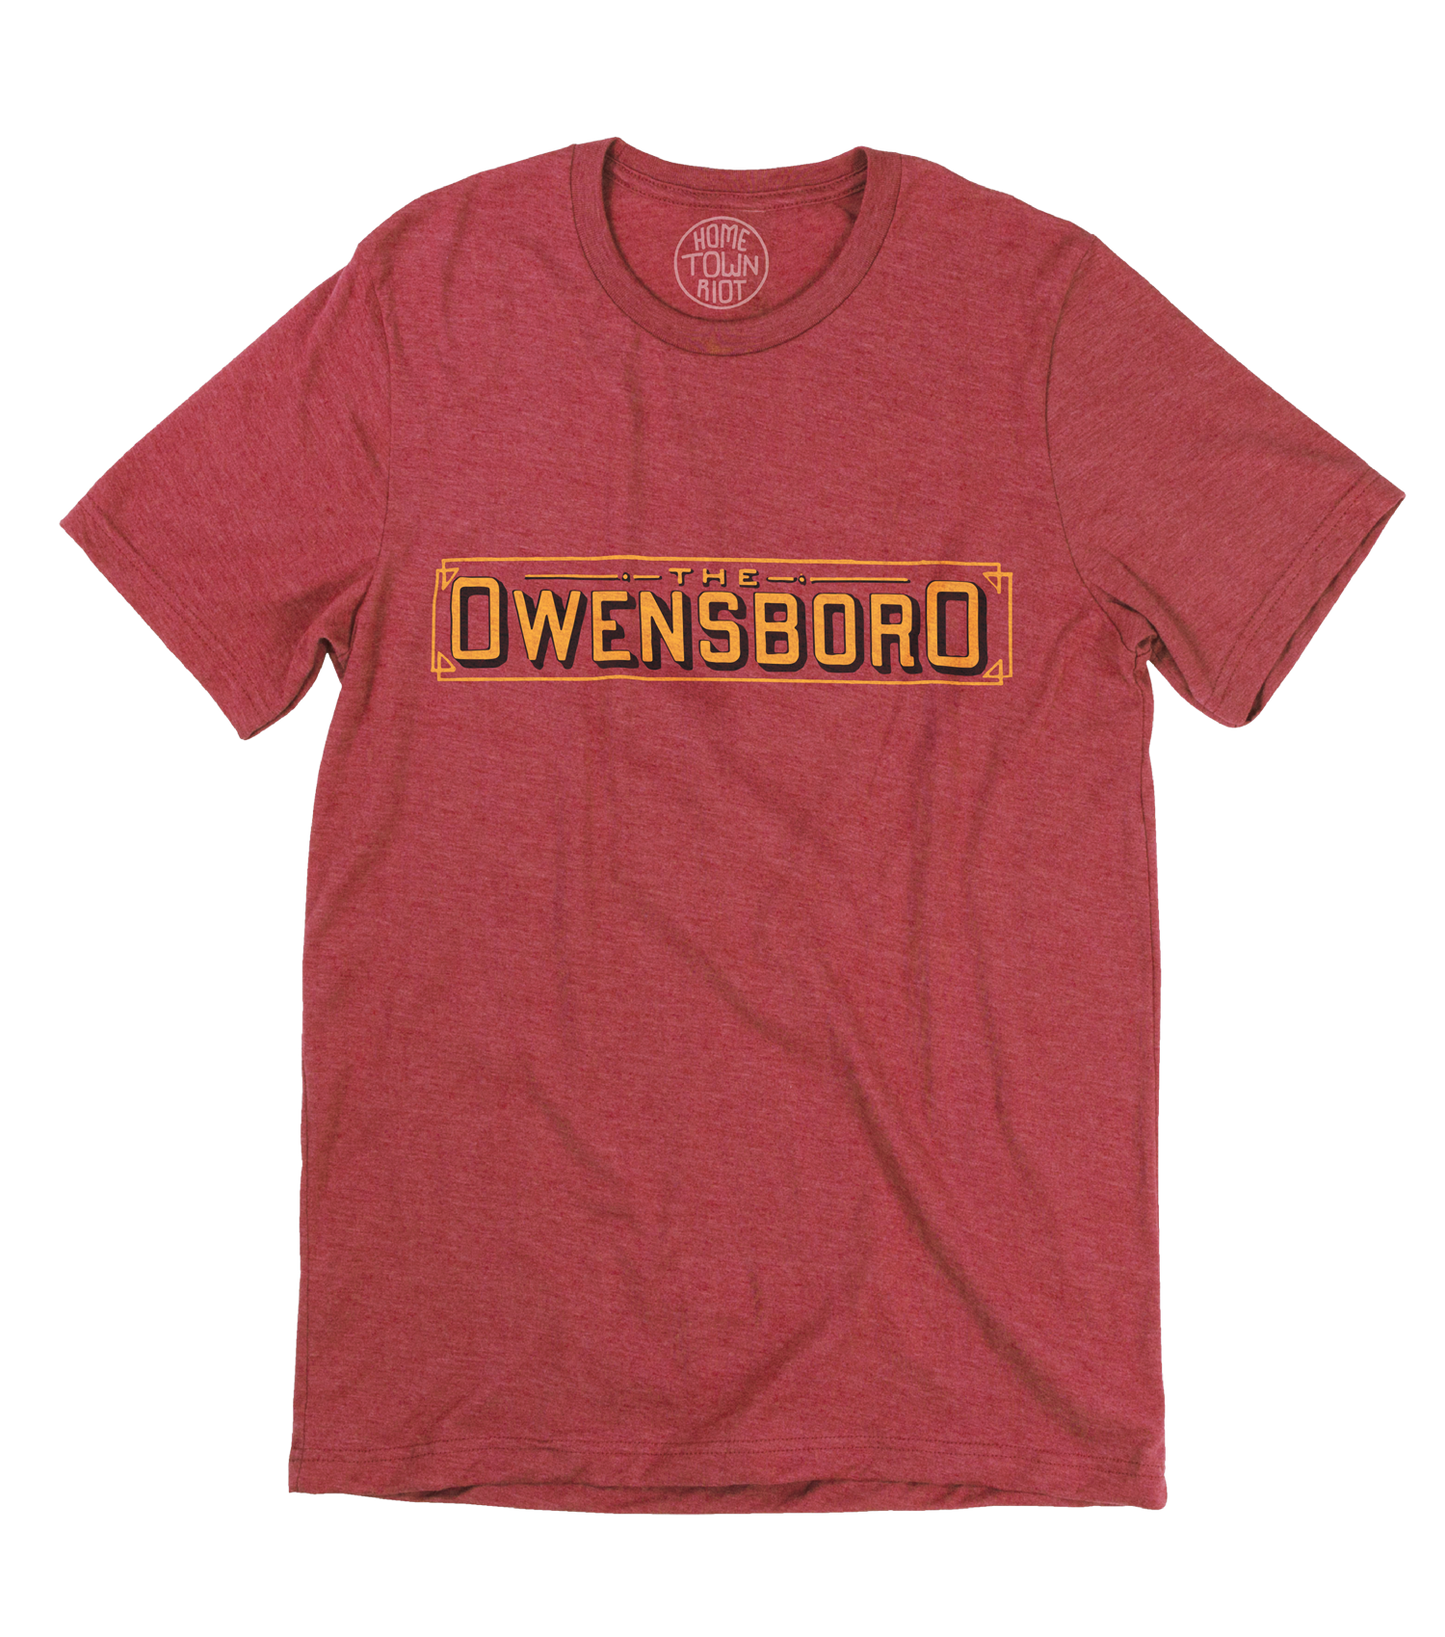 The OwensborO Shirt